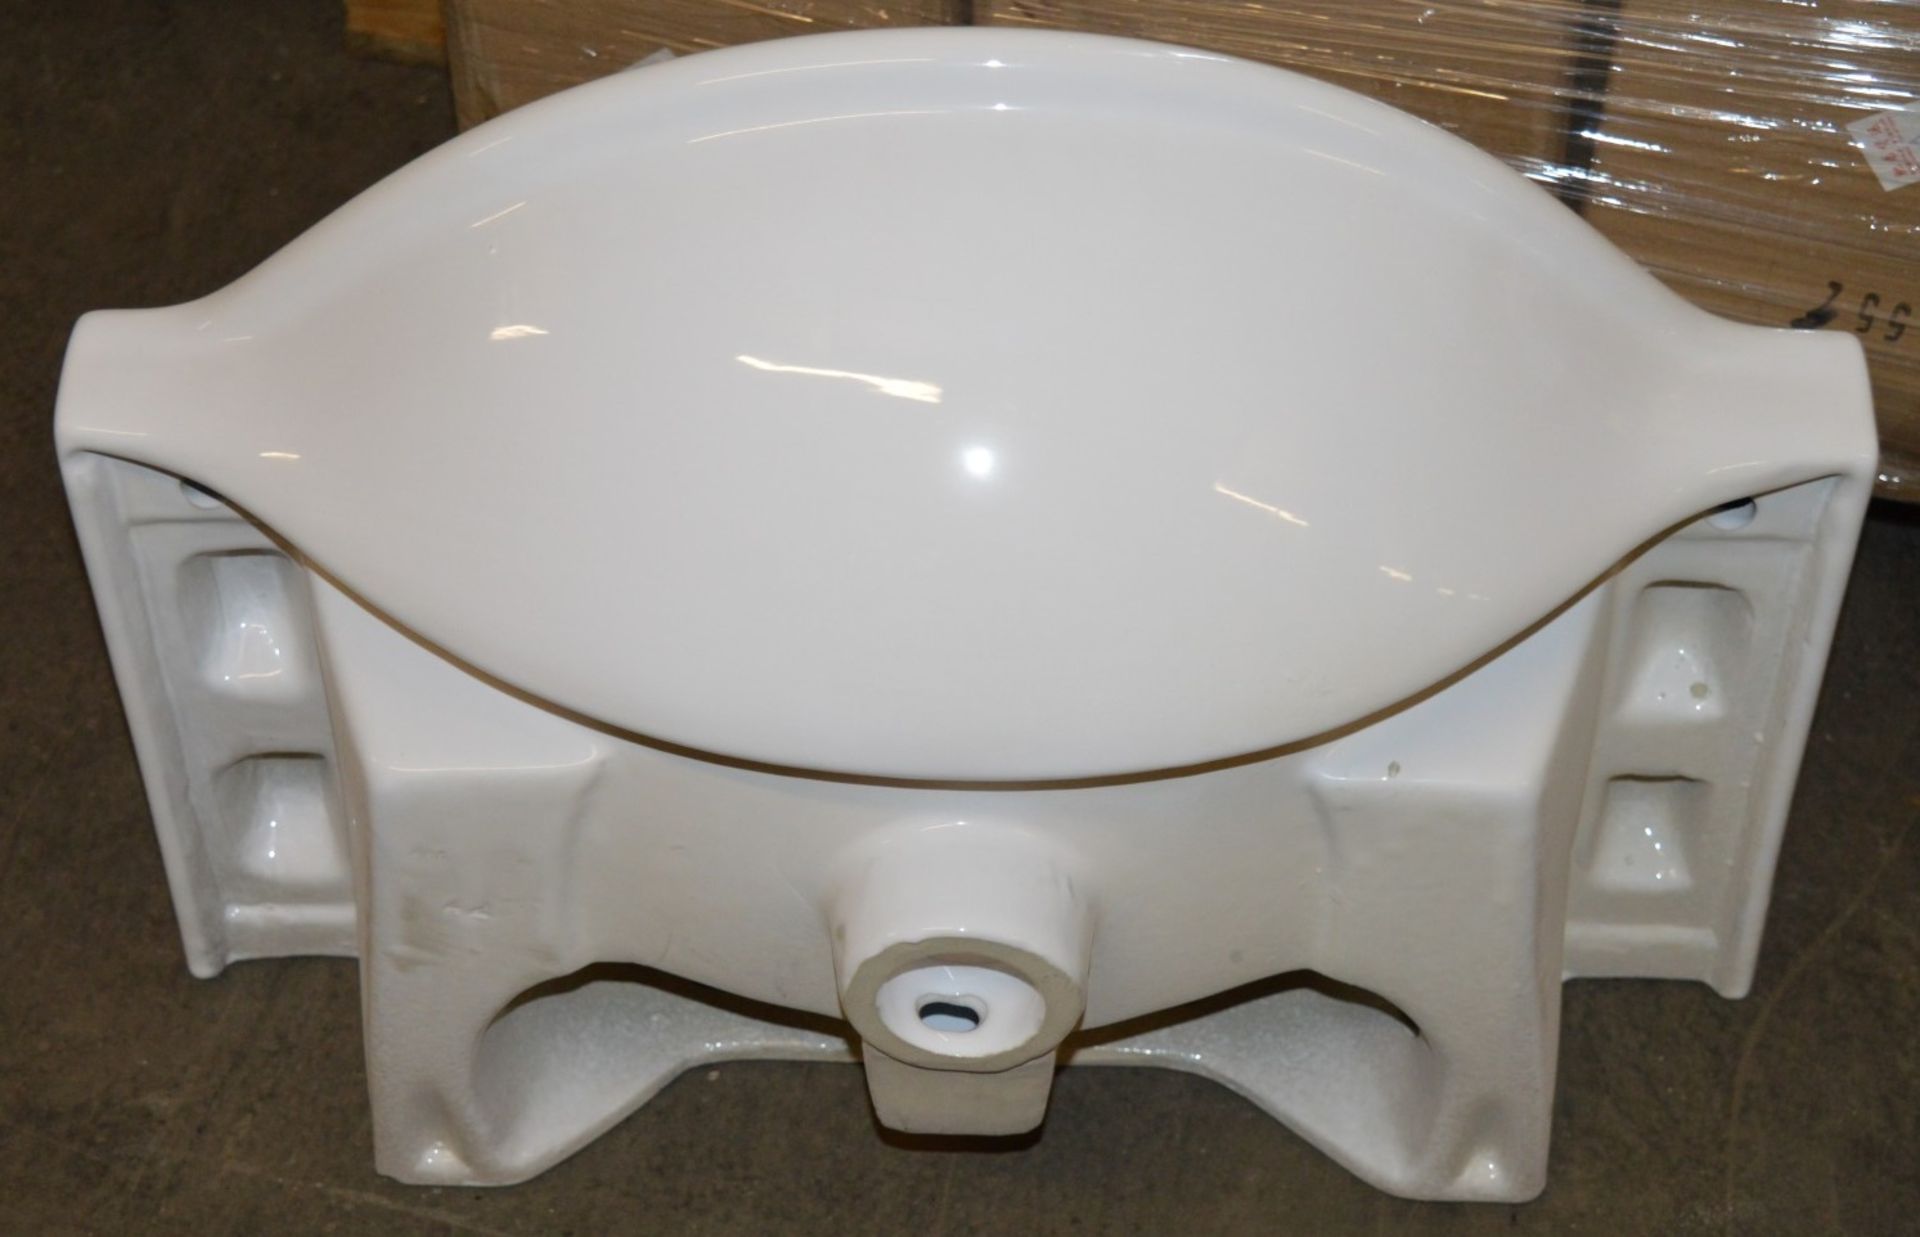 1 x Vogue Bathrooms LUNA Semi Recessed Bathroom Sink Basin - High Quality Ceramic Sink Basin - CL034 - Image 3 of 3